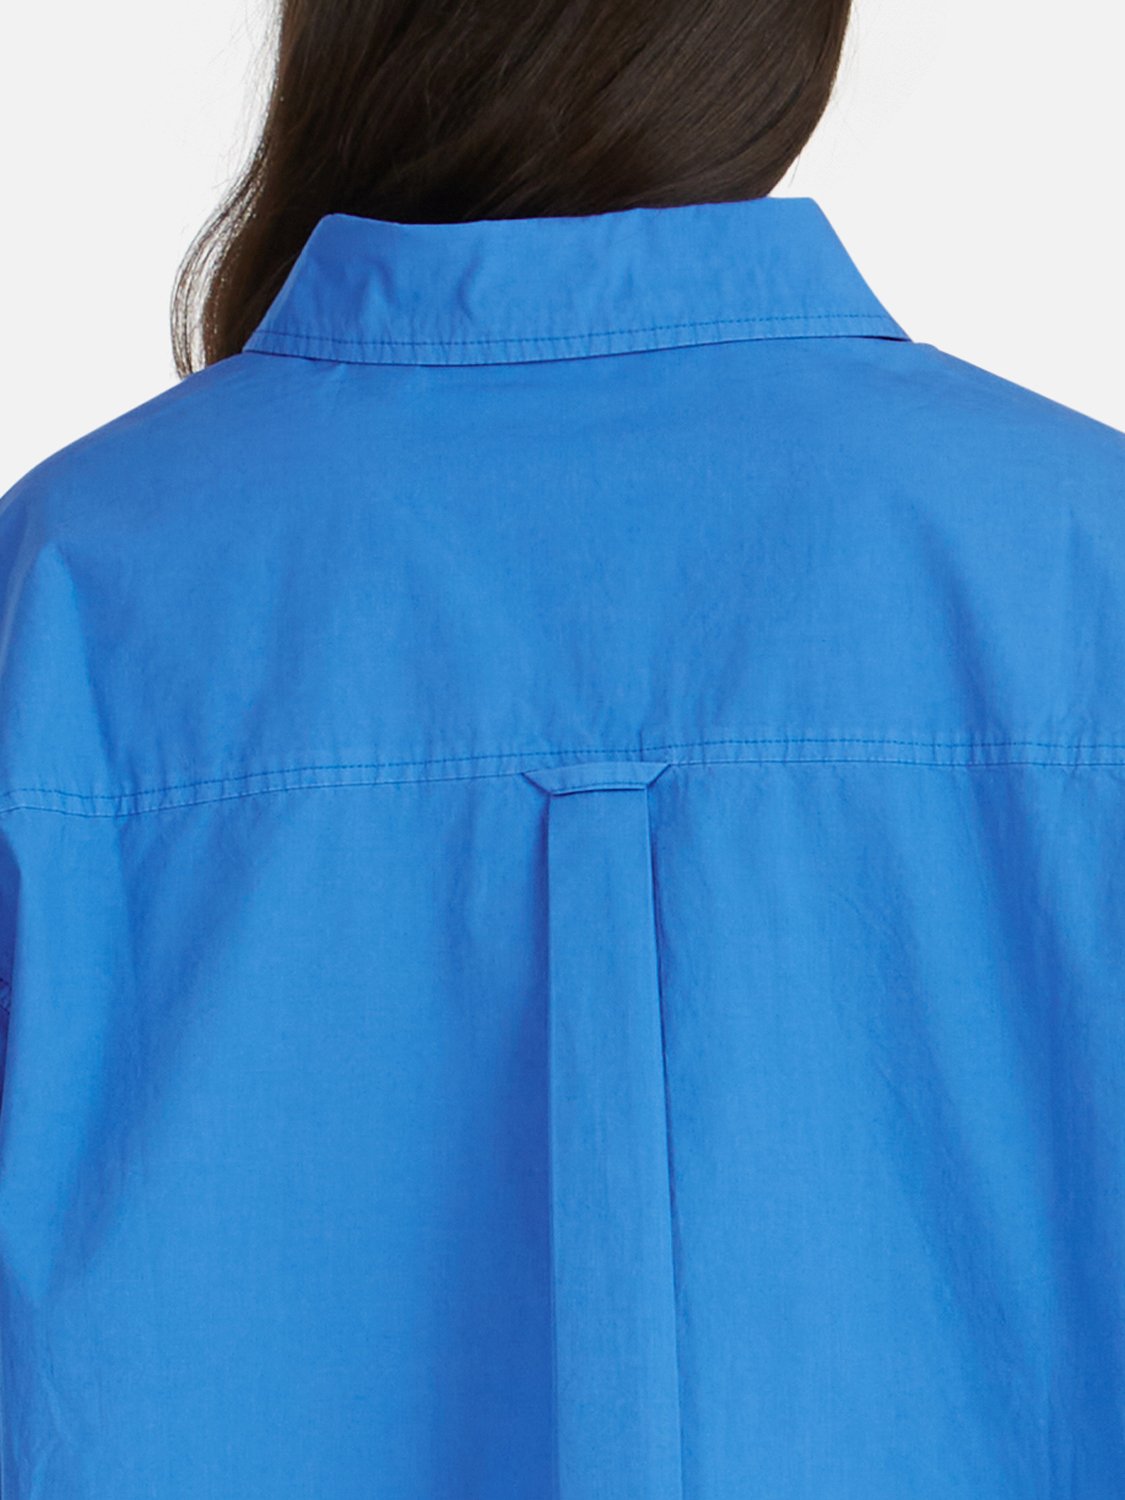 Alycia Shirt Dress - Dazzling Blue